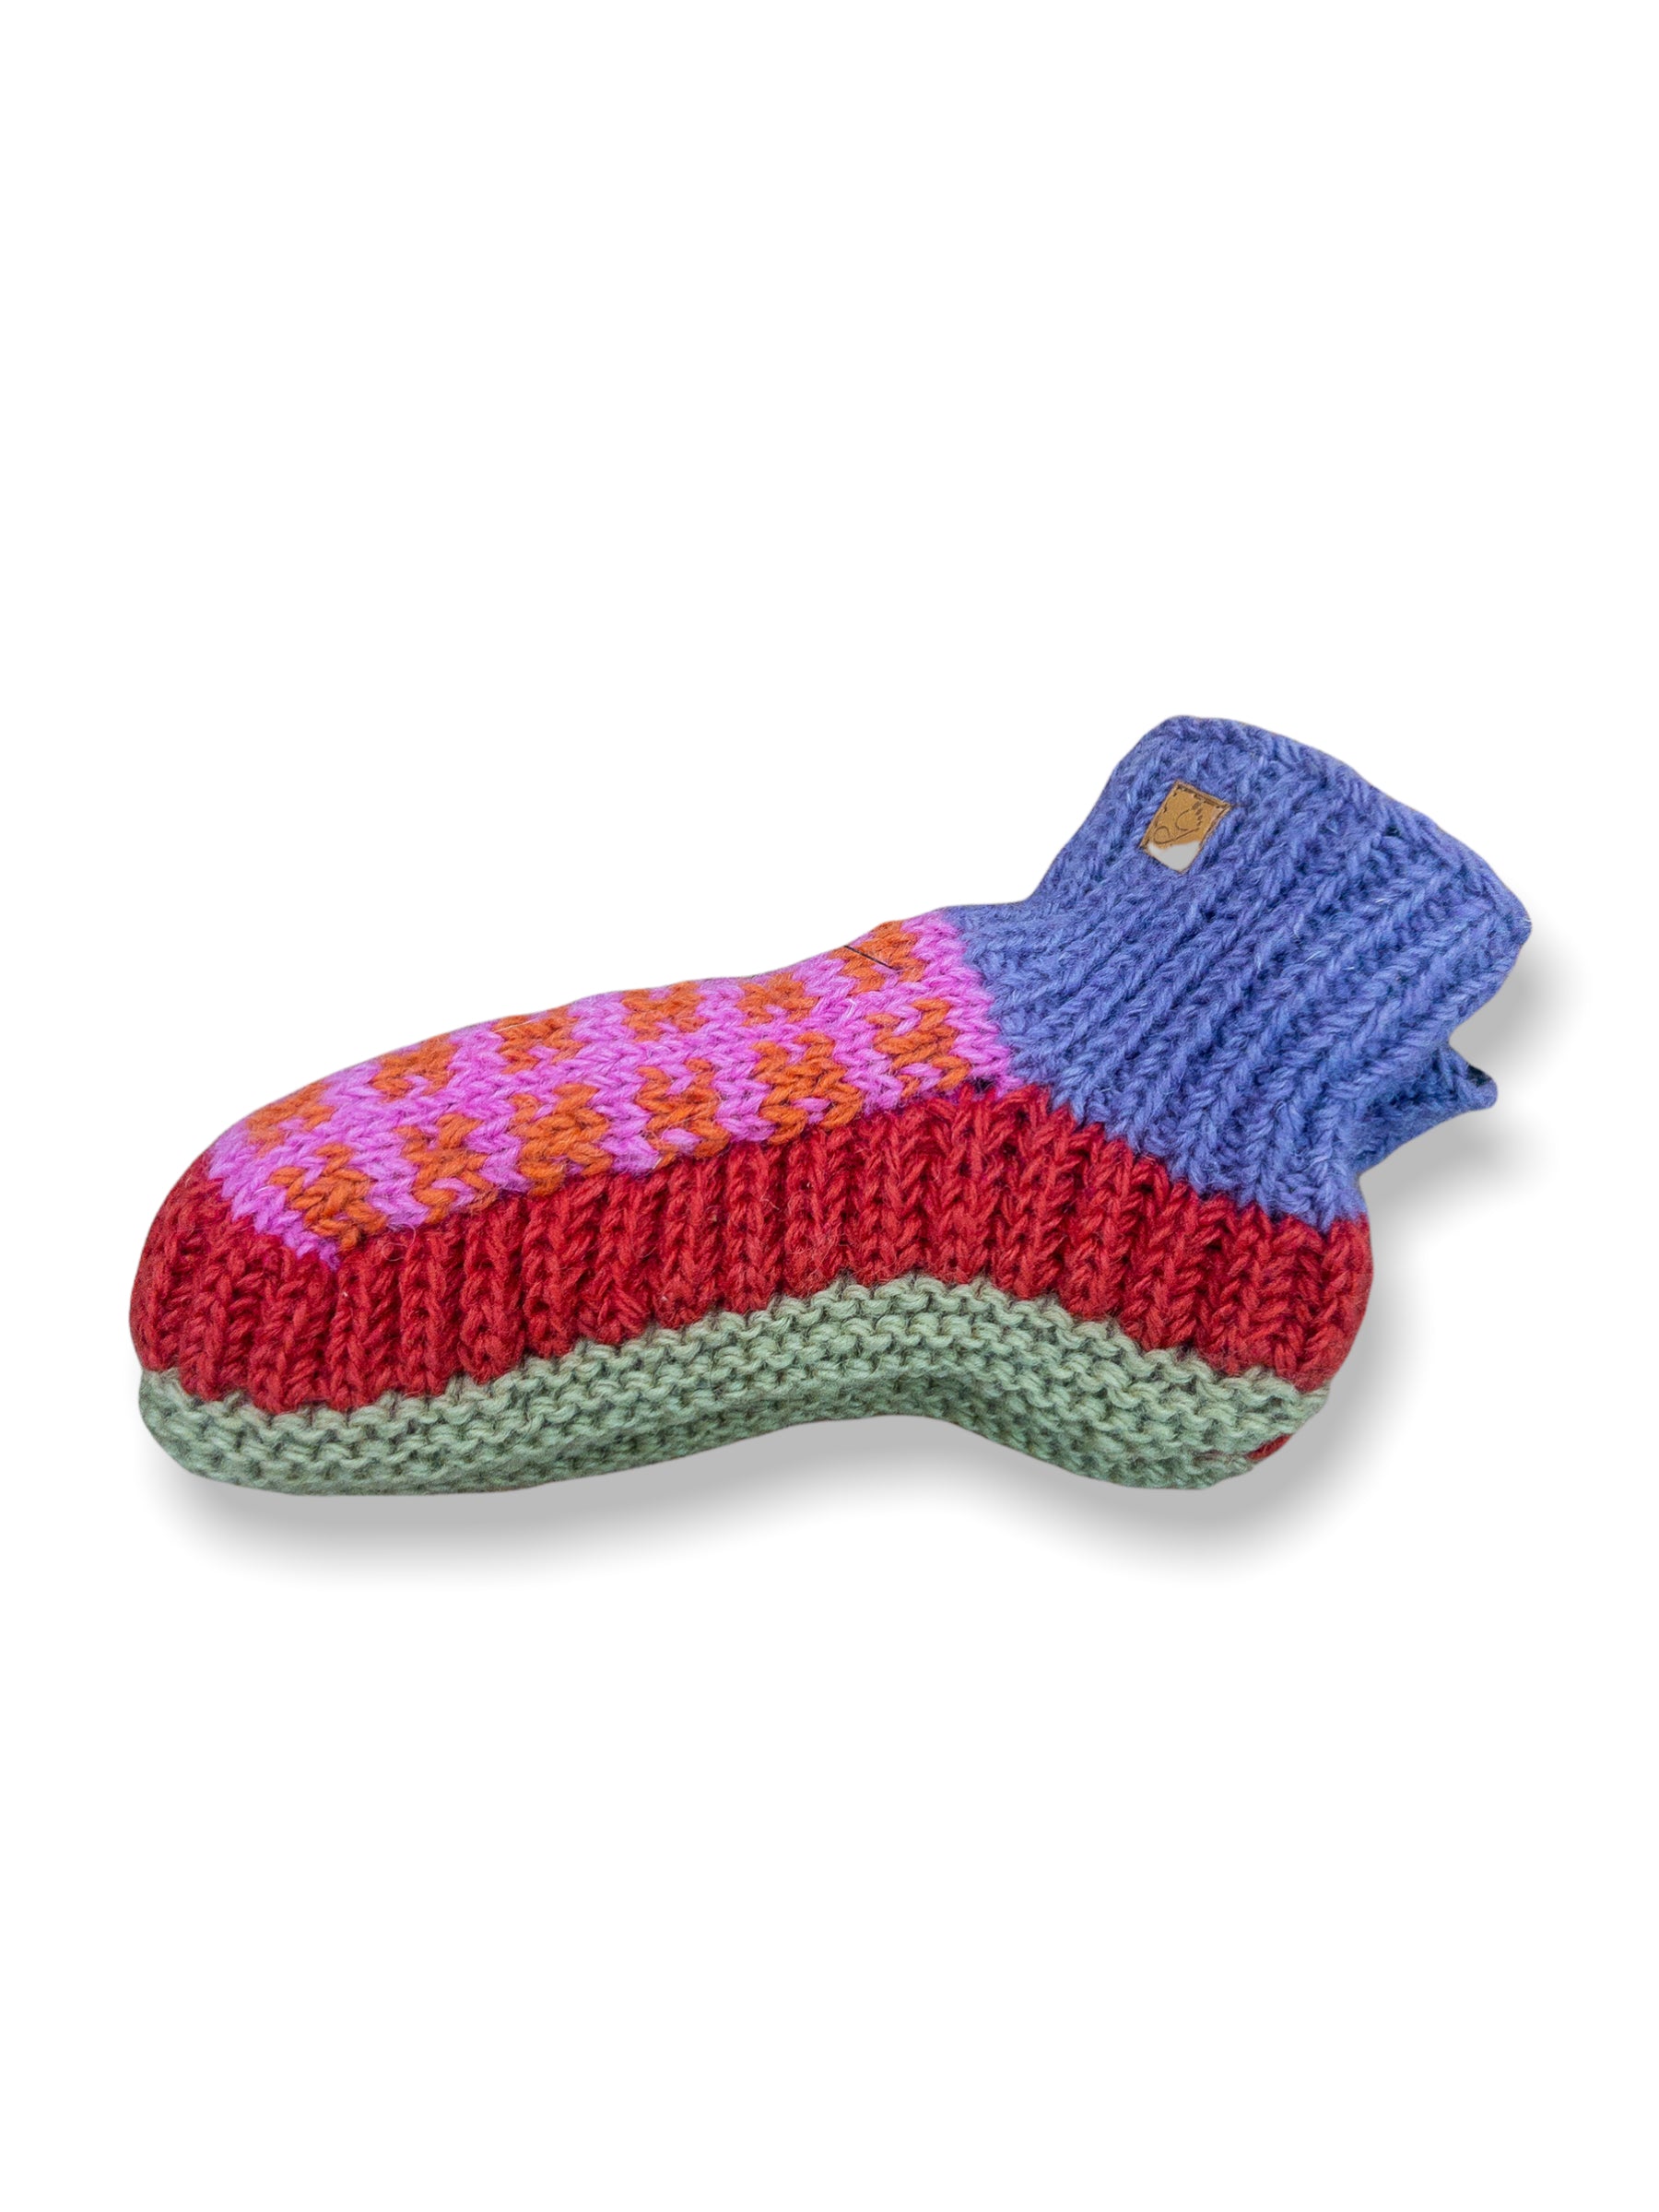 Thick Knit Fuzzy Wool Socks For Men and Women – Tibetan Socks